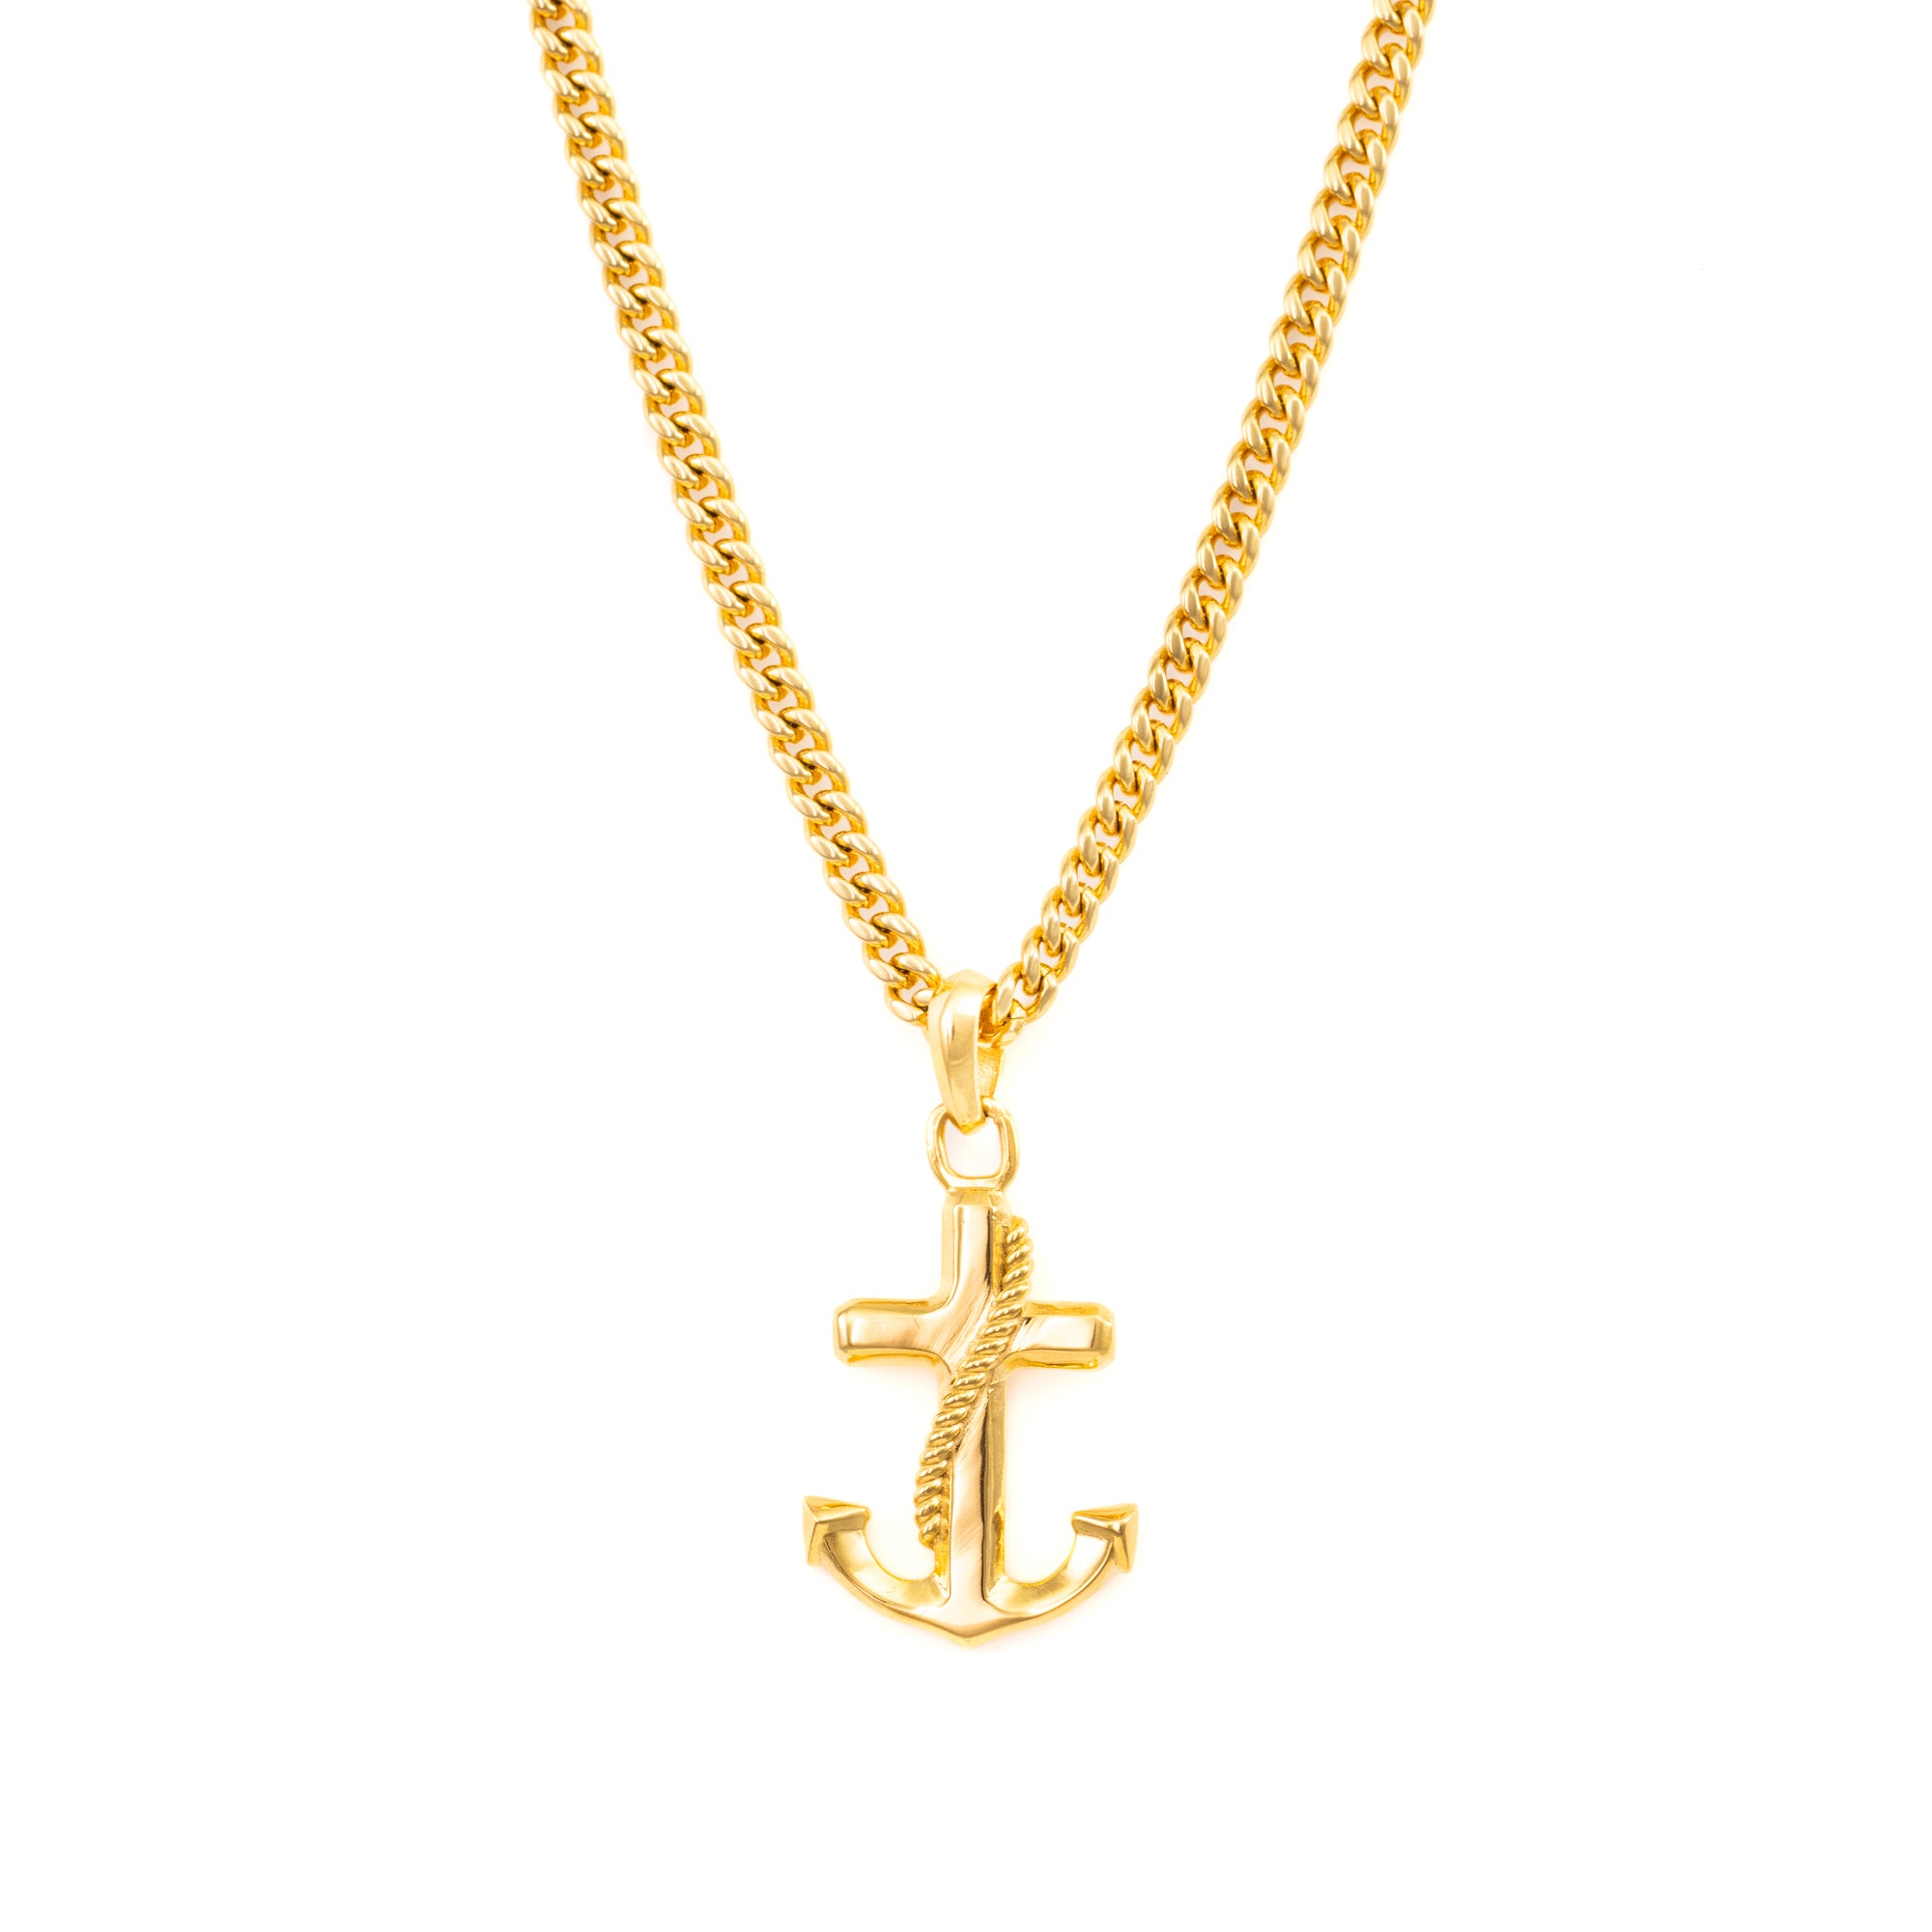 Anchor pendant in 18k or 22k gold